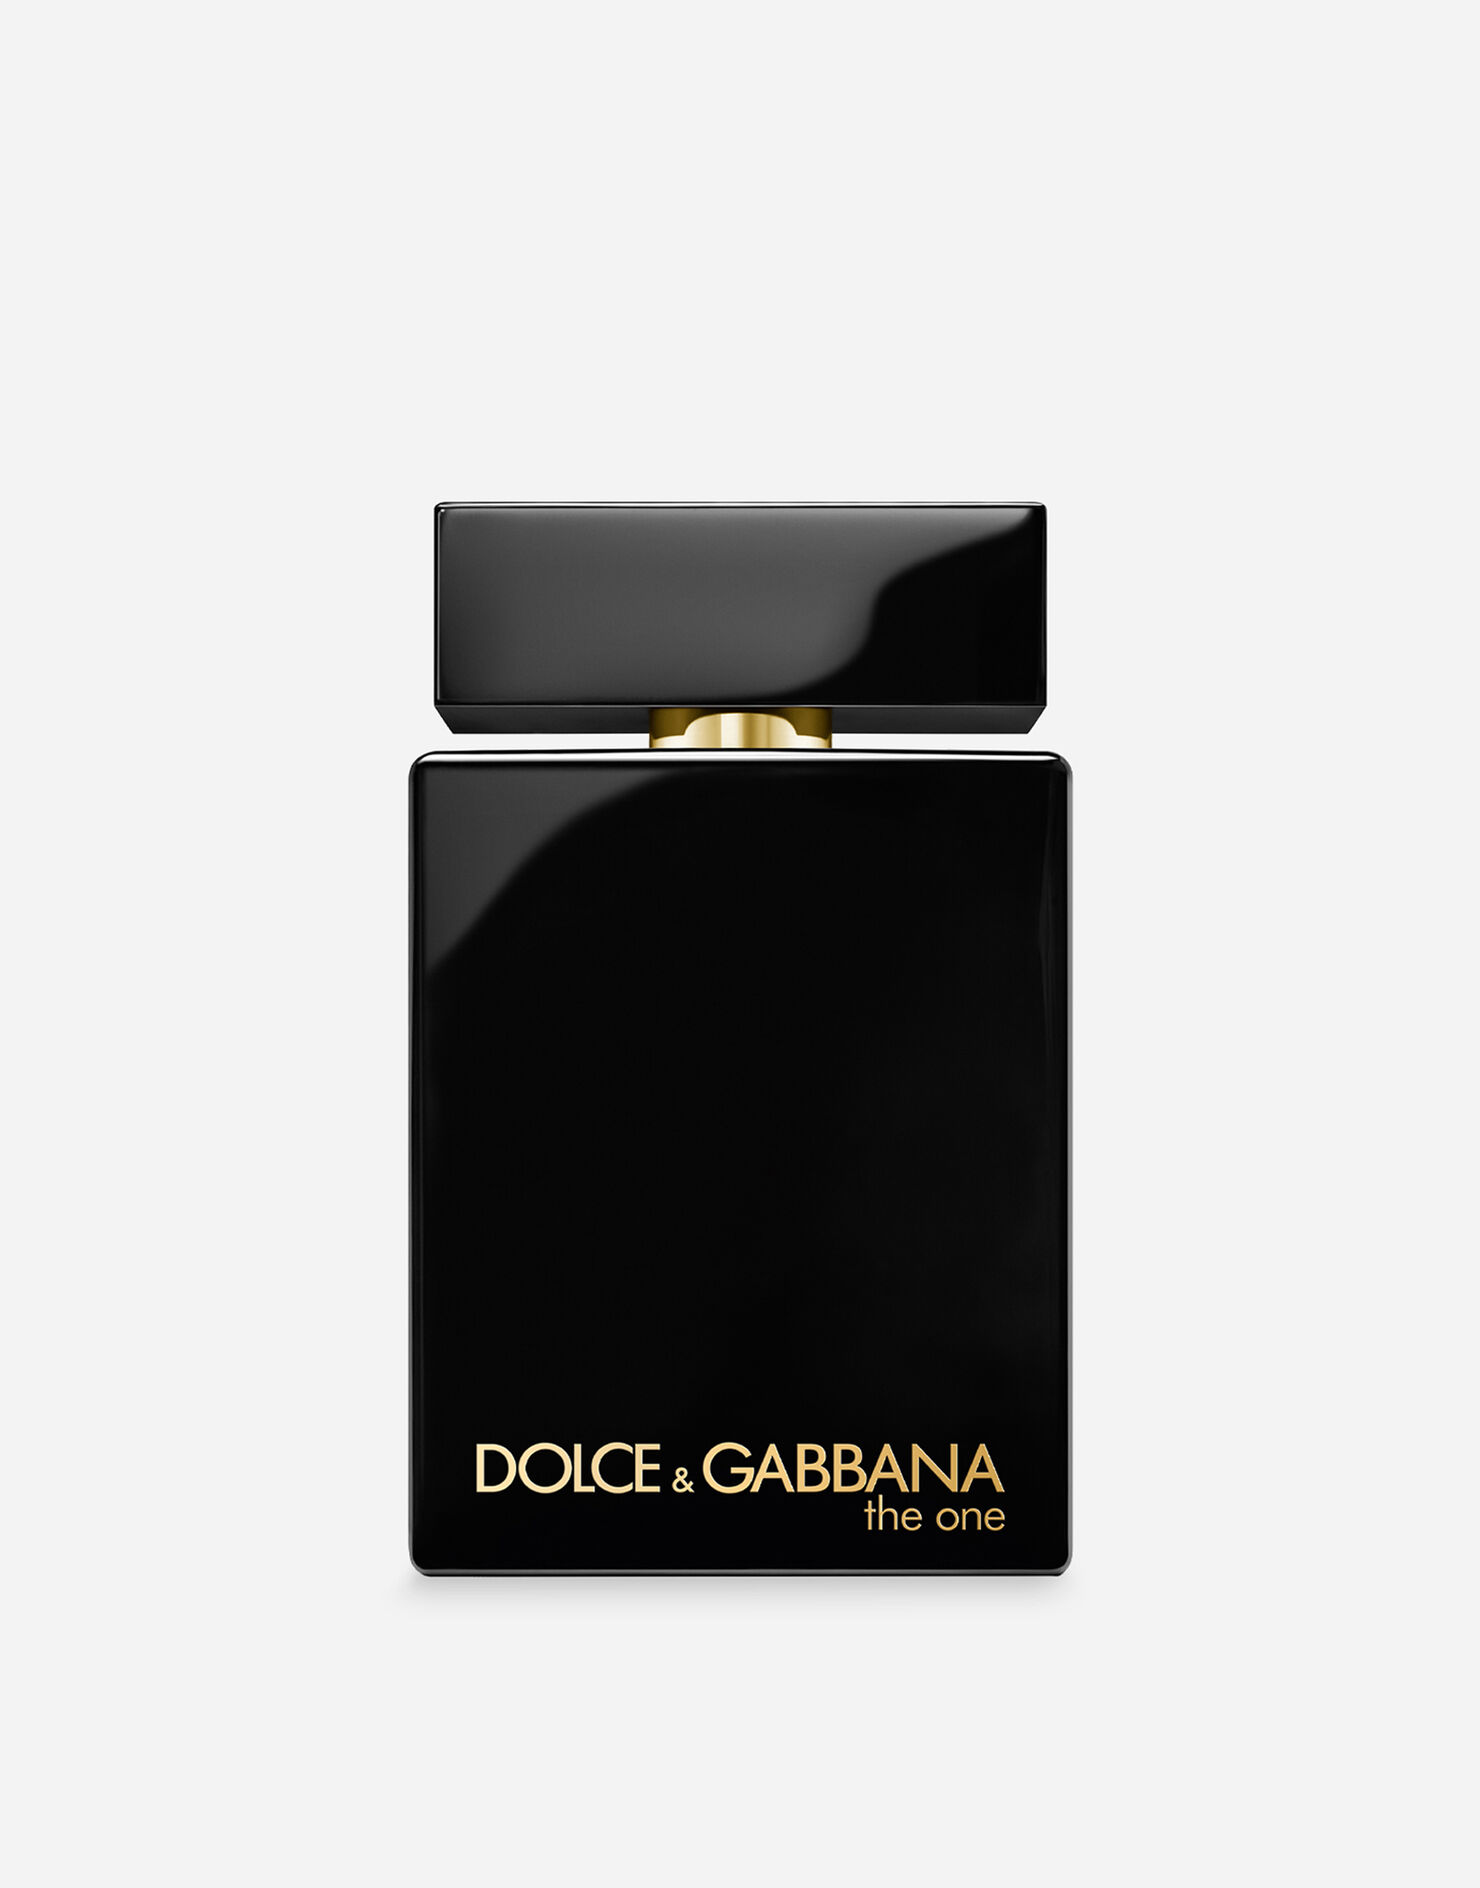 Dolce&Gabbana Beauty The One for Men Eau de Parfum Intense